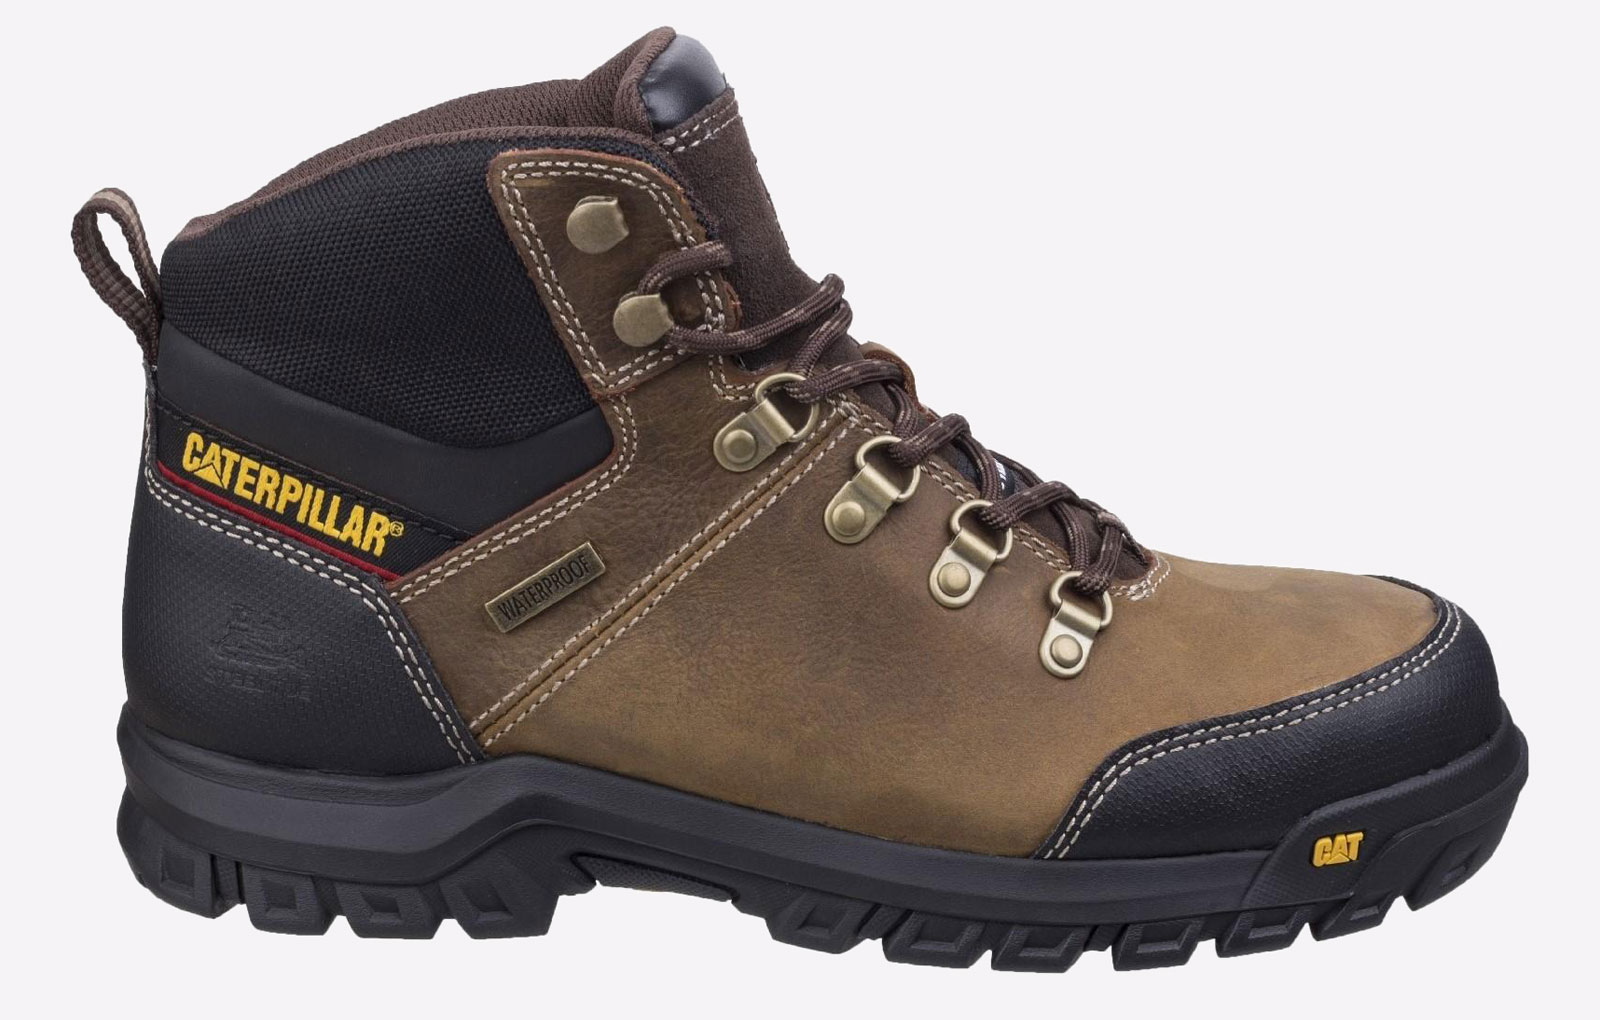 Caterpillar Framework Safety Boot Leather Mens - GRD-26947-45225-10